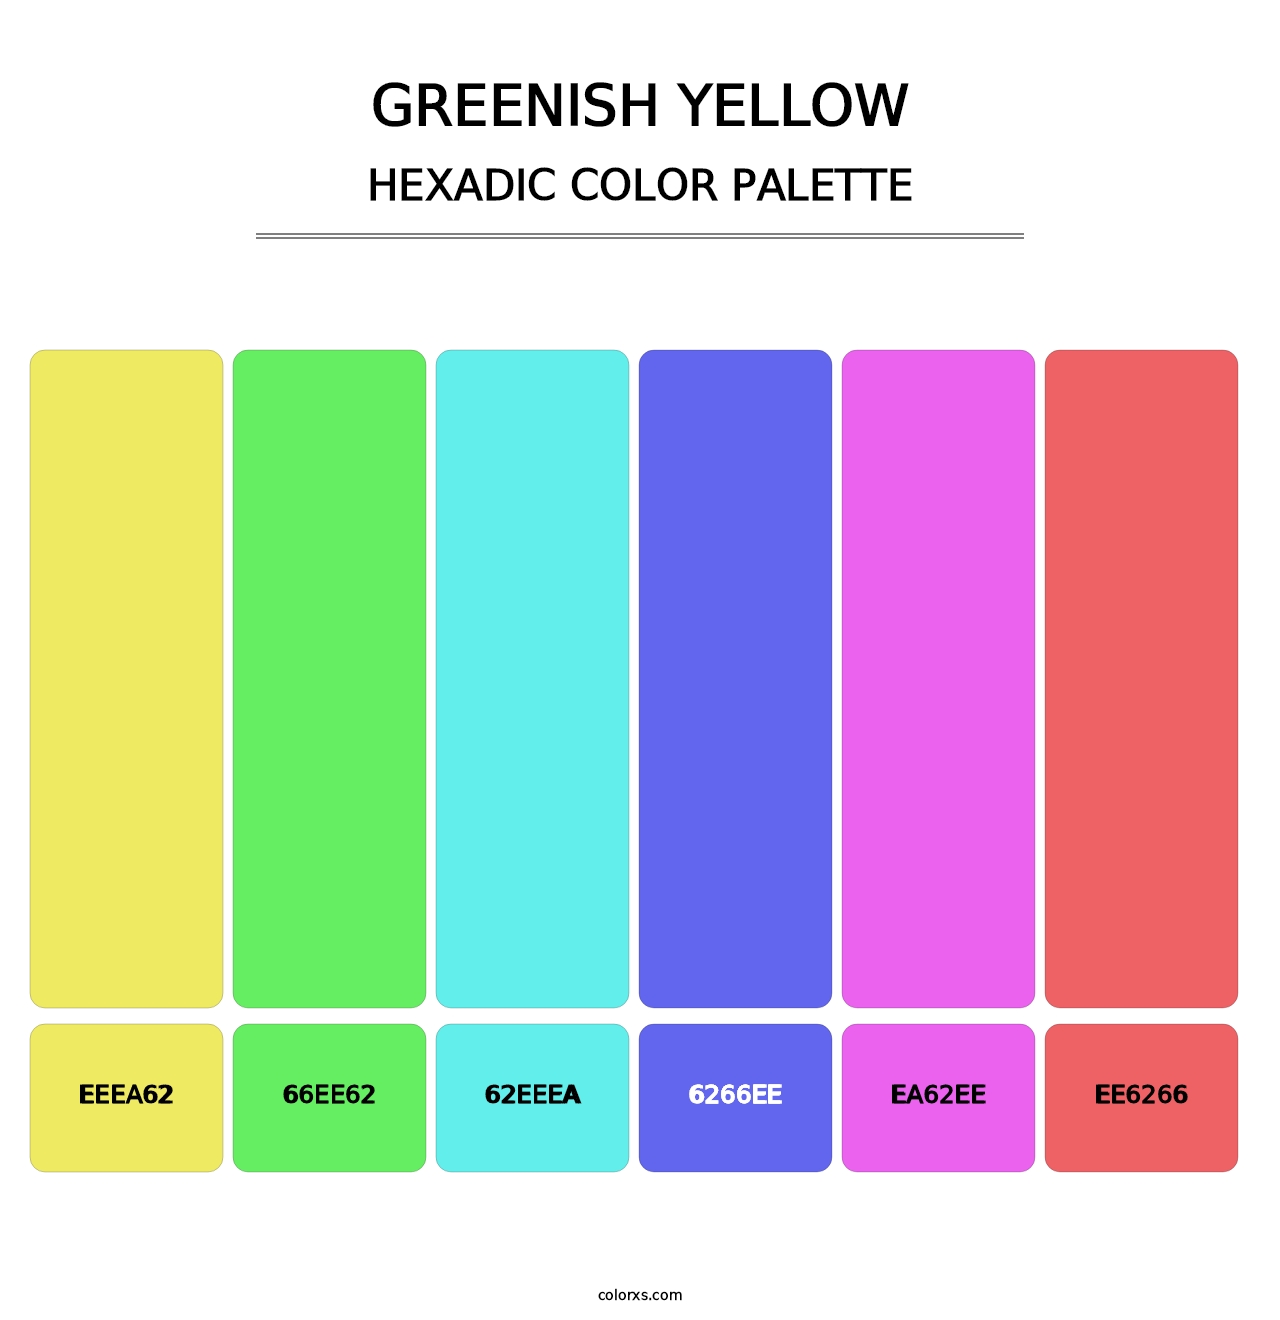 Greenish Yellow - Hexadic Color Palette